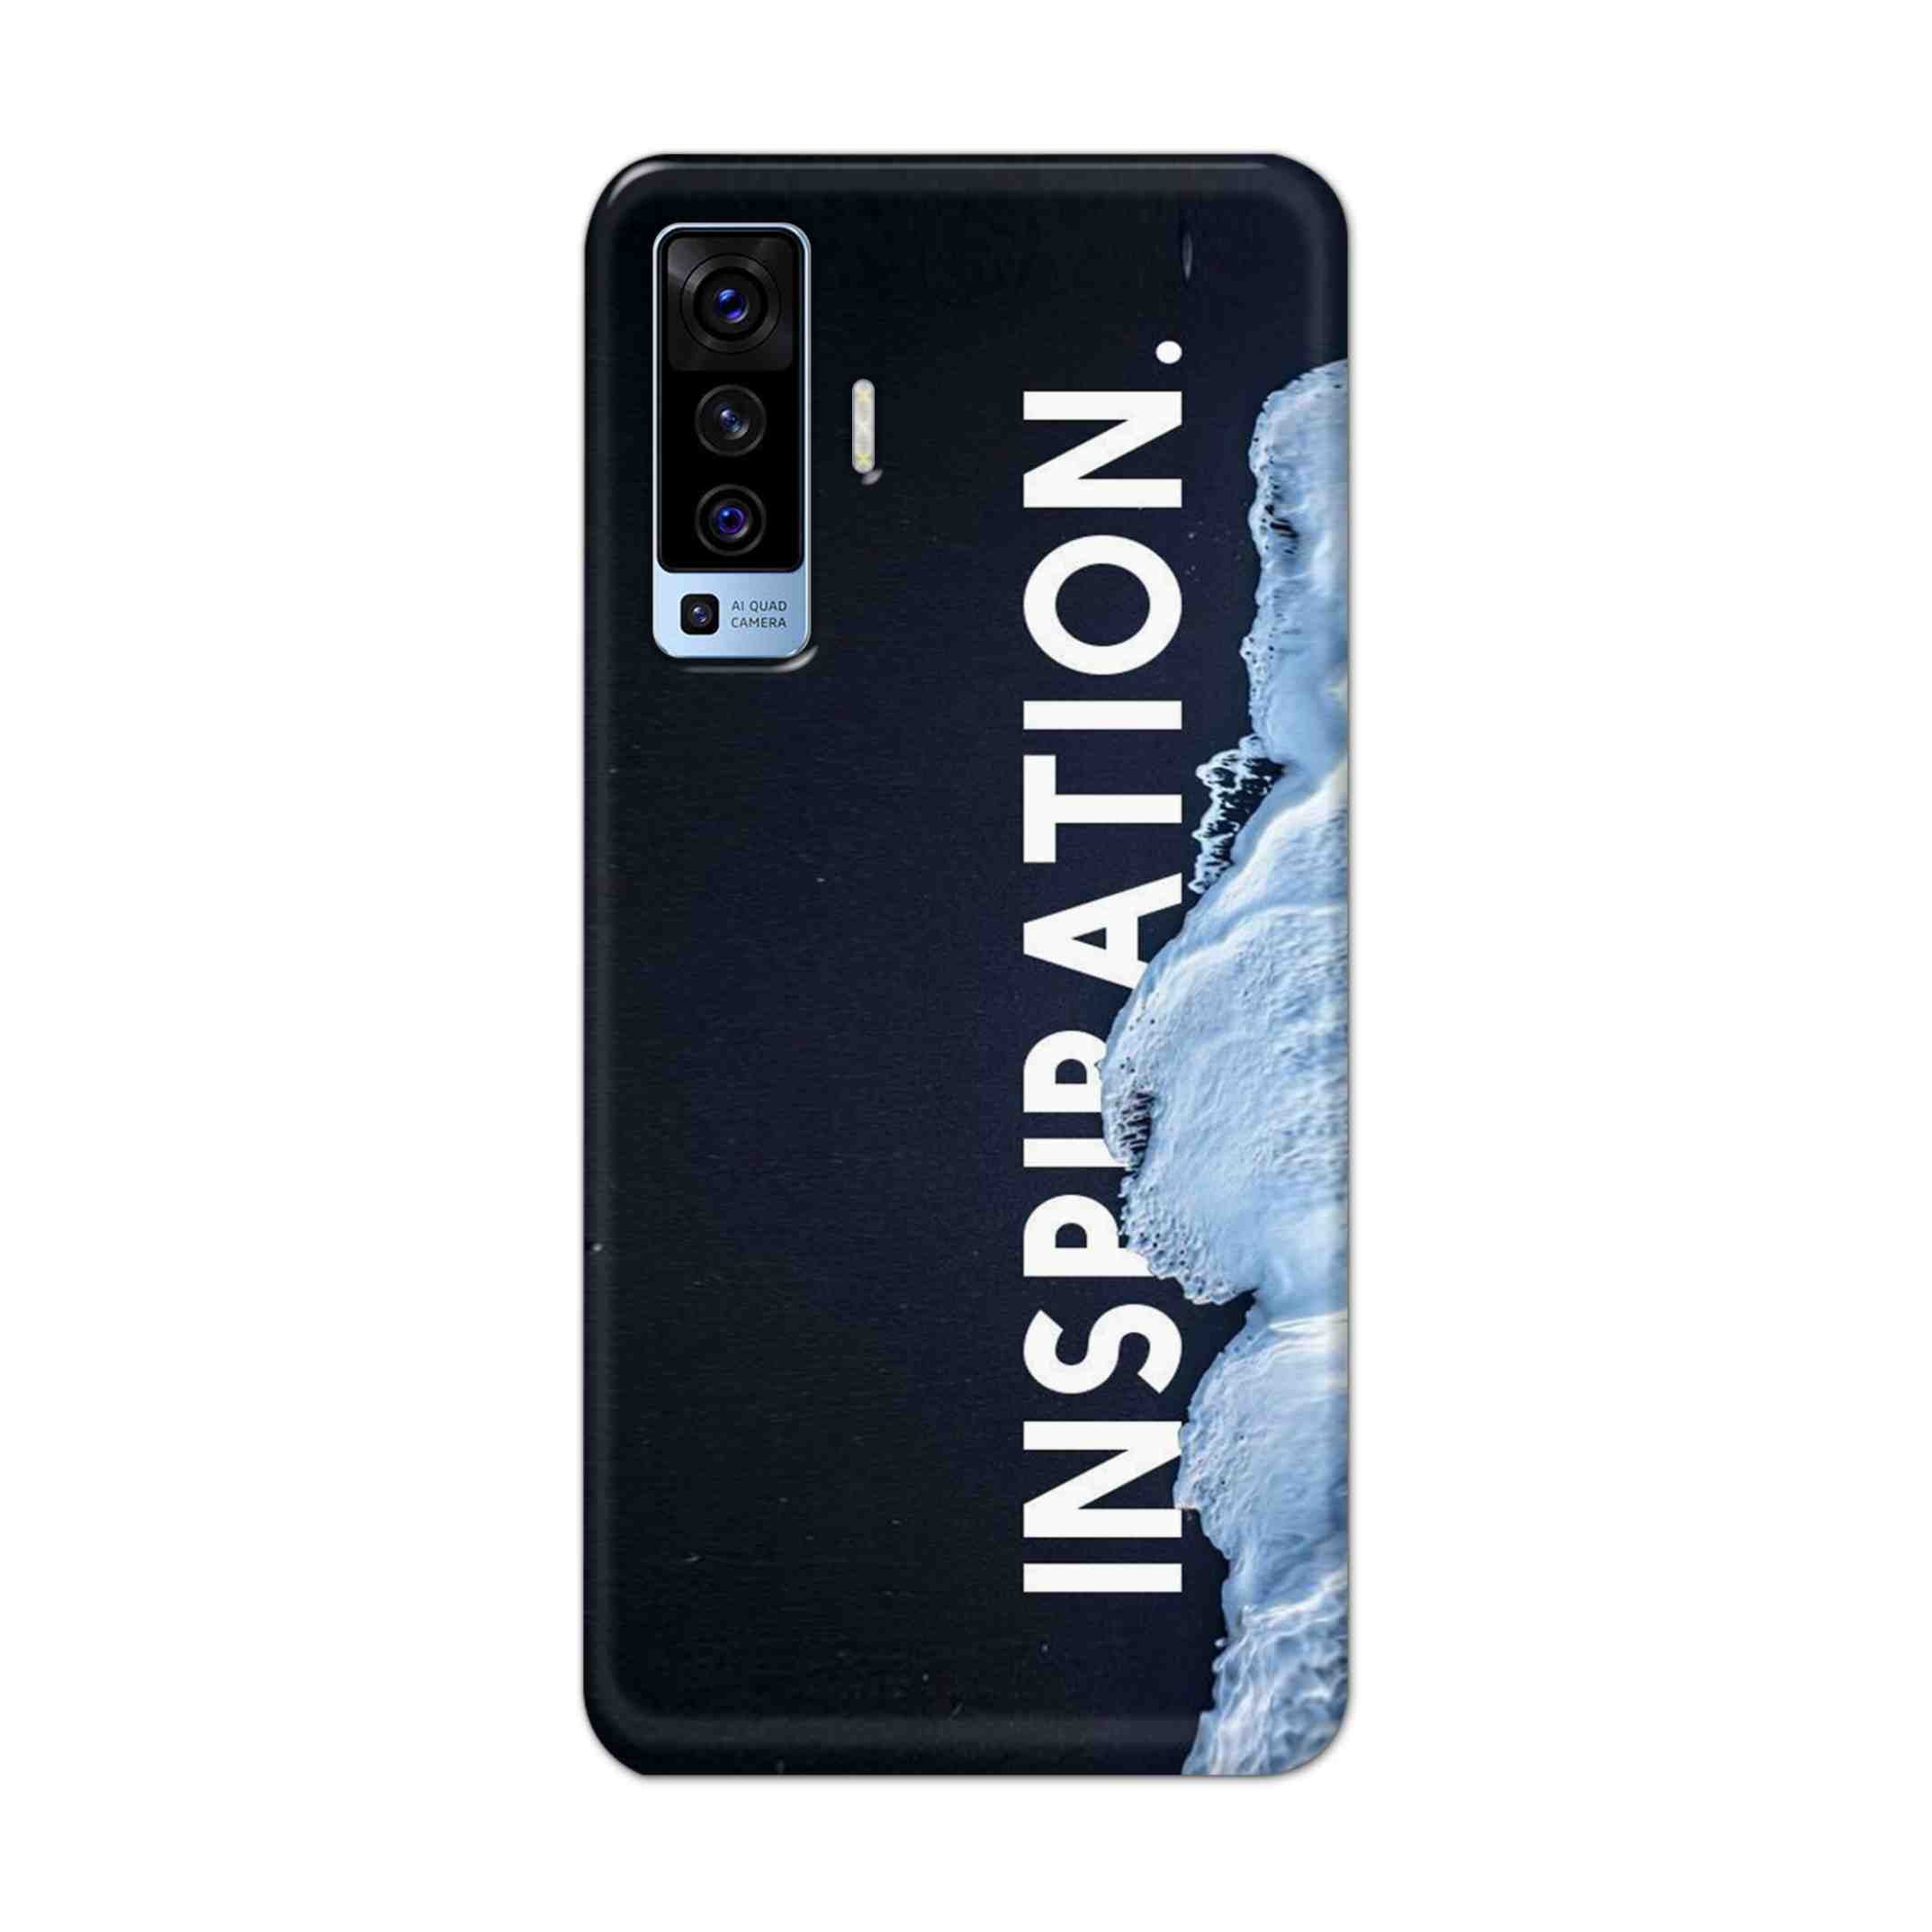 Buy Inspiration Hard Back Mobile Phone Case Cover For Vivo X50 Online